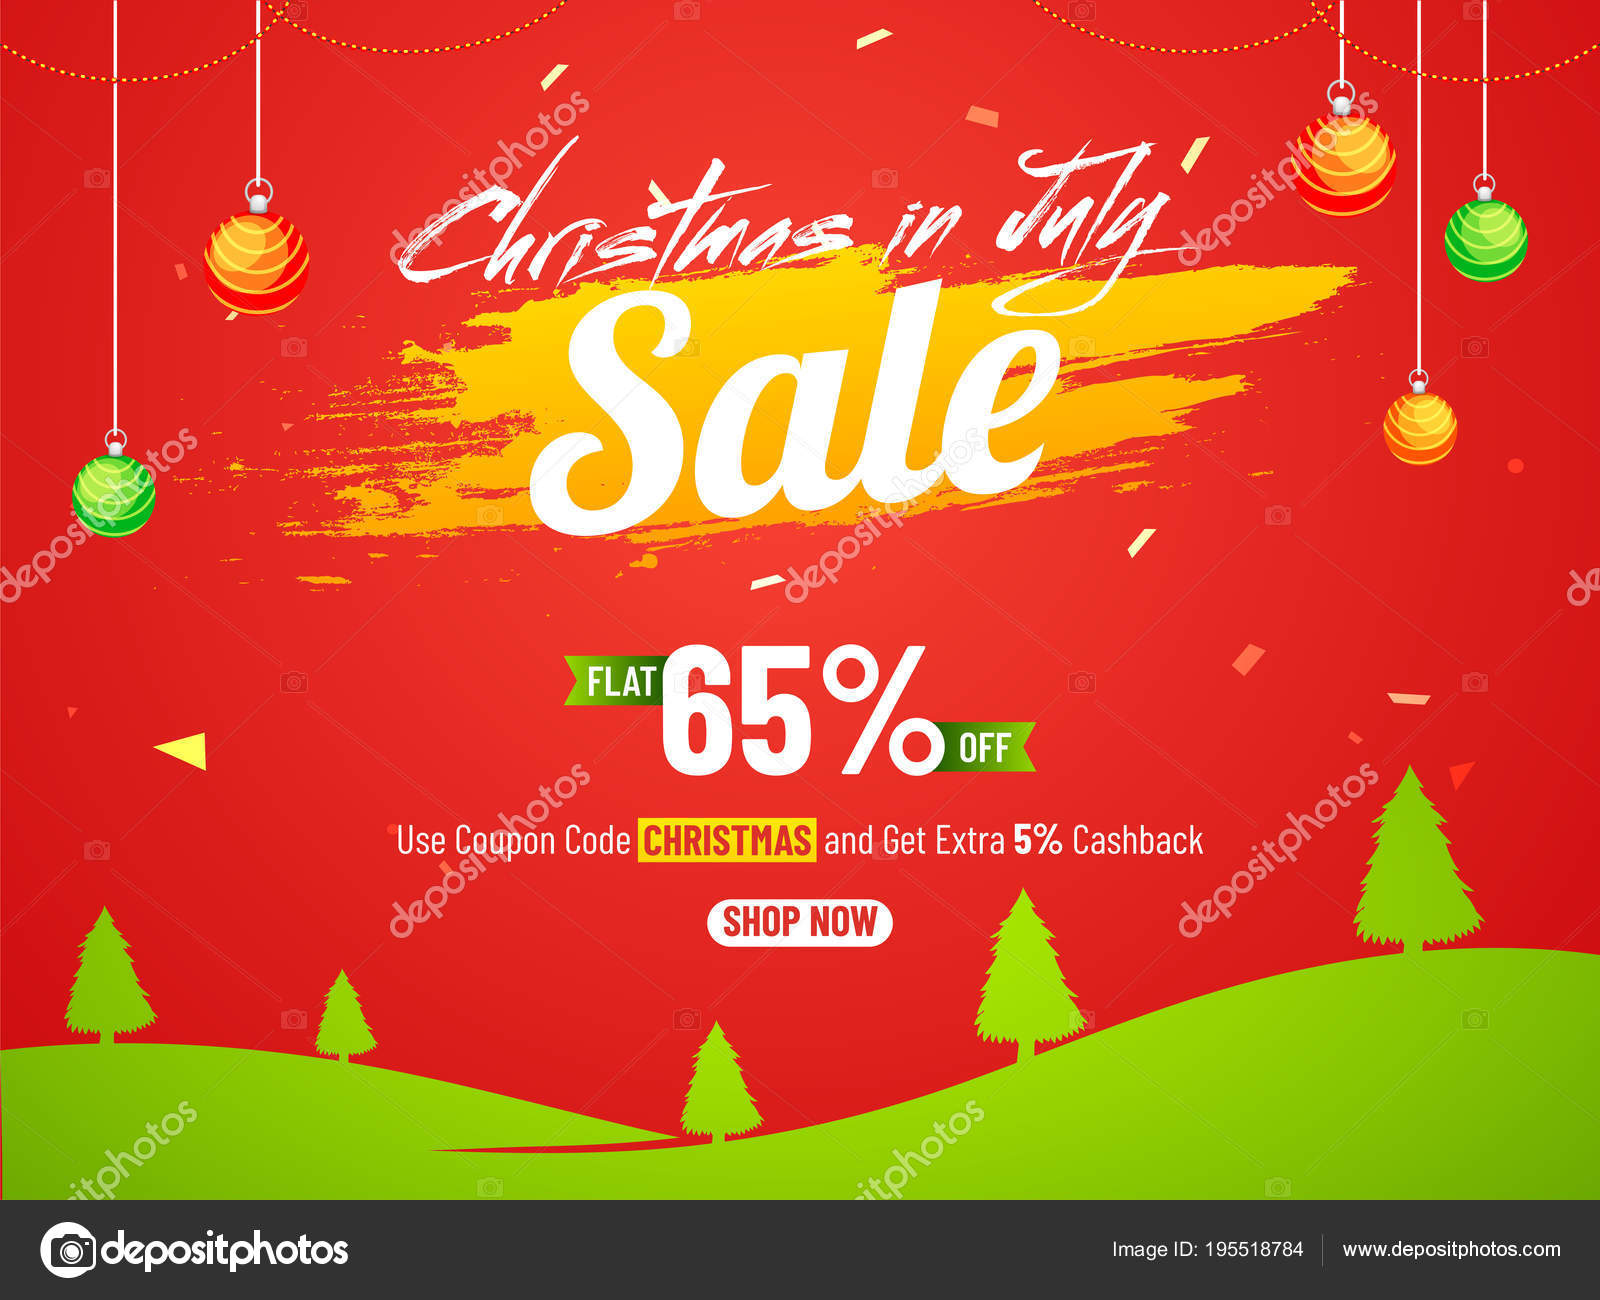 Christmas Cashback Discounts, Offers & Deals